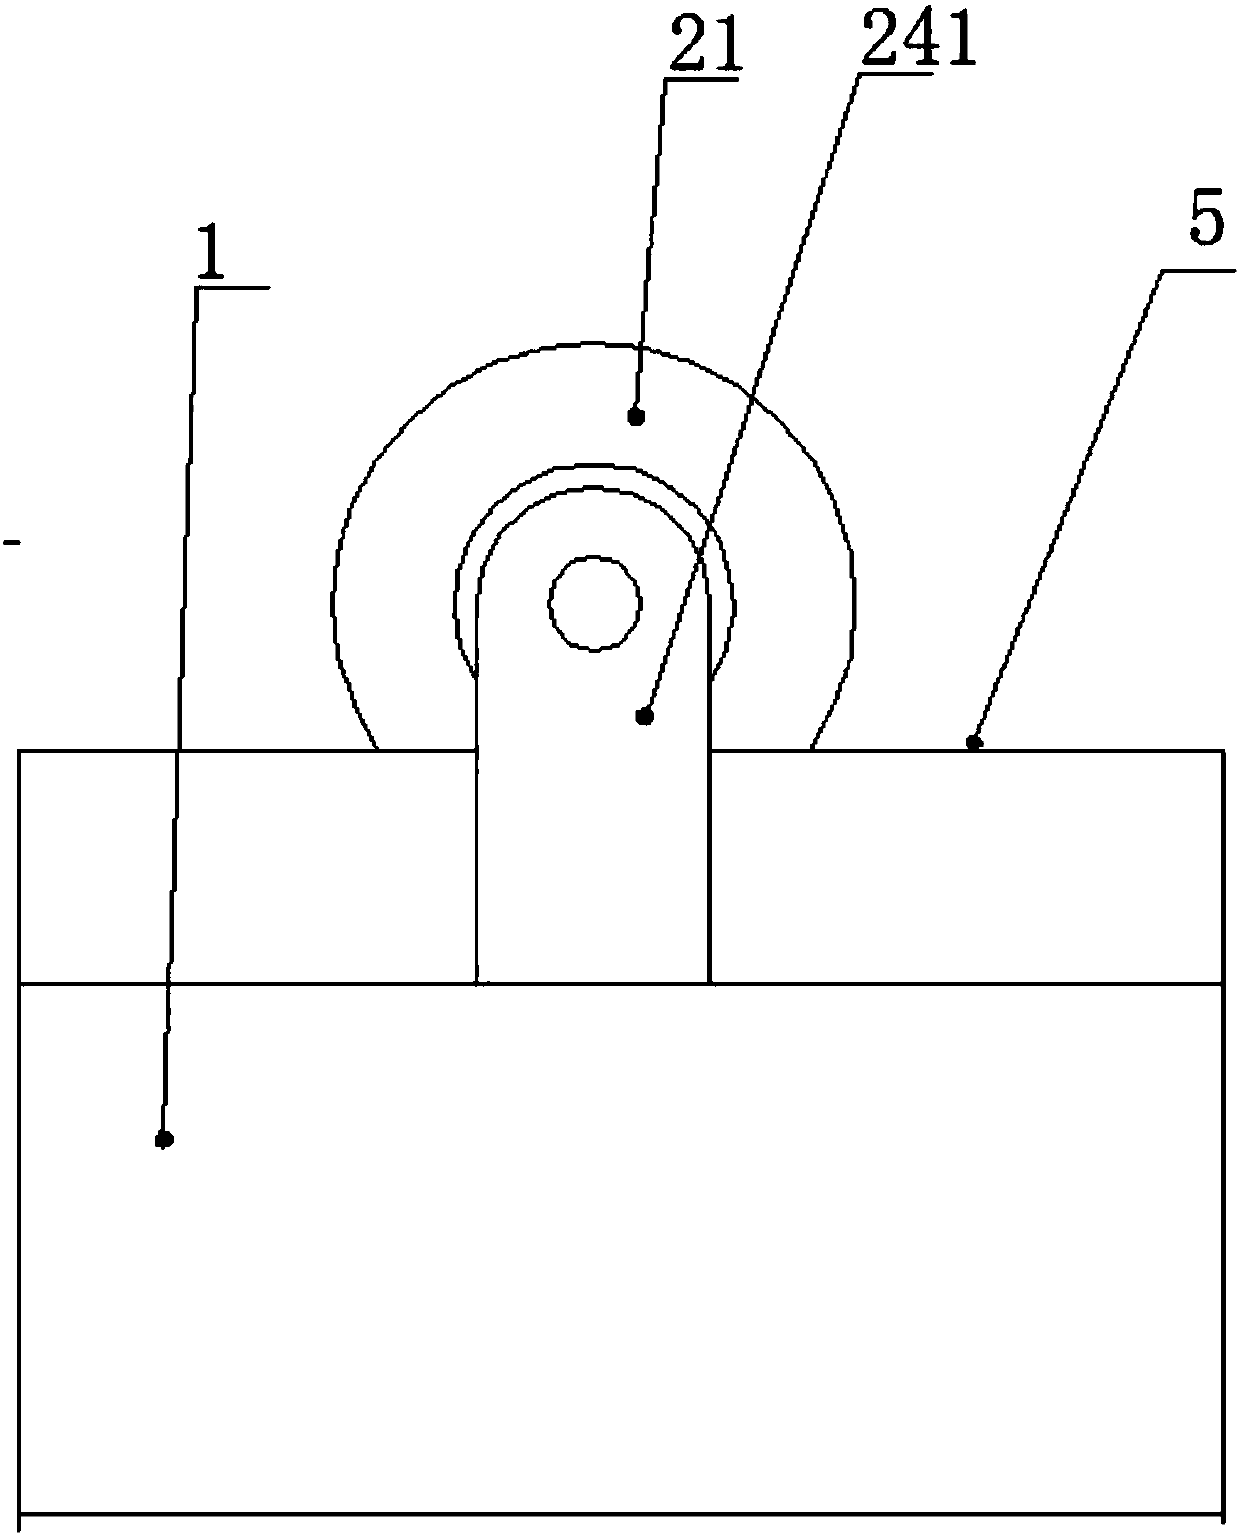 A special cutting mechanism for a willow splitter